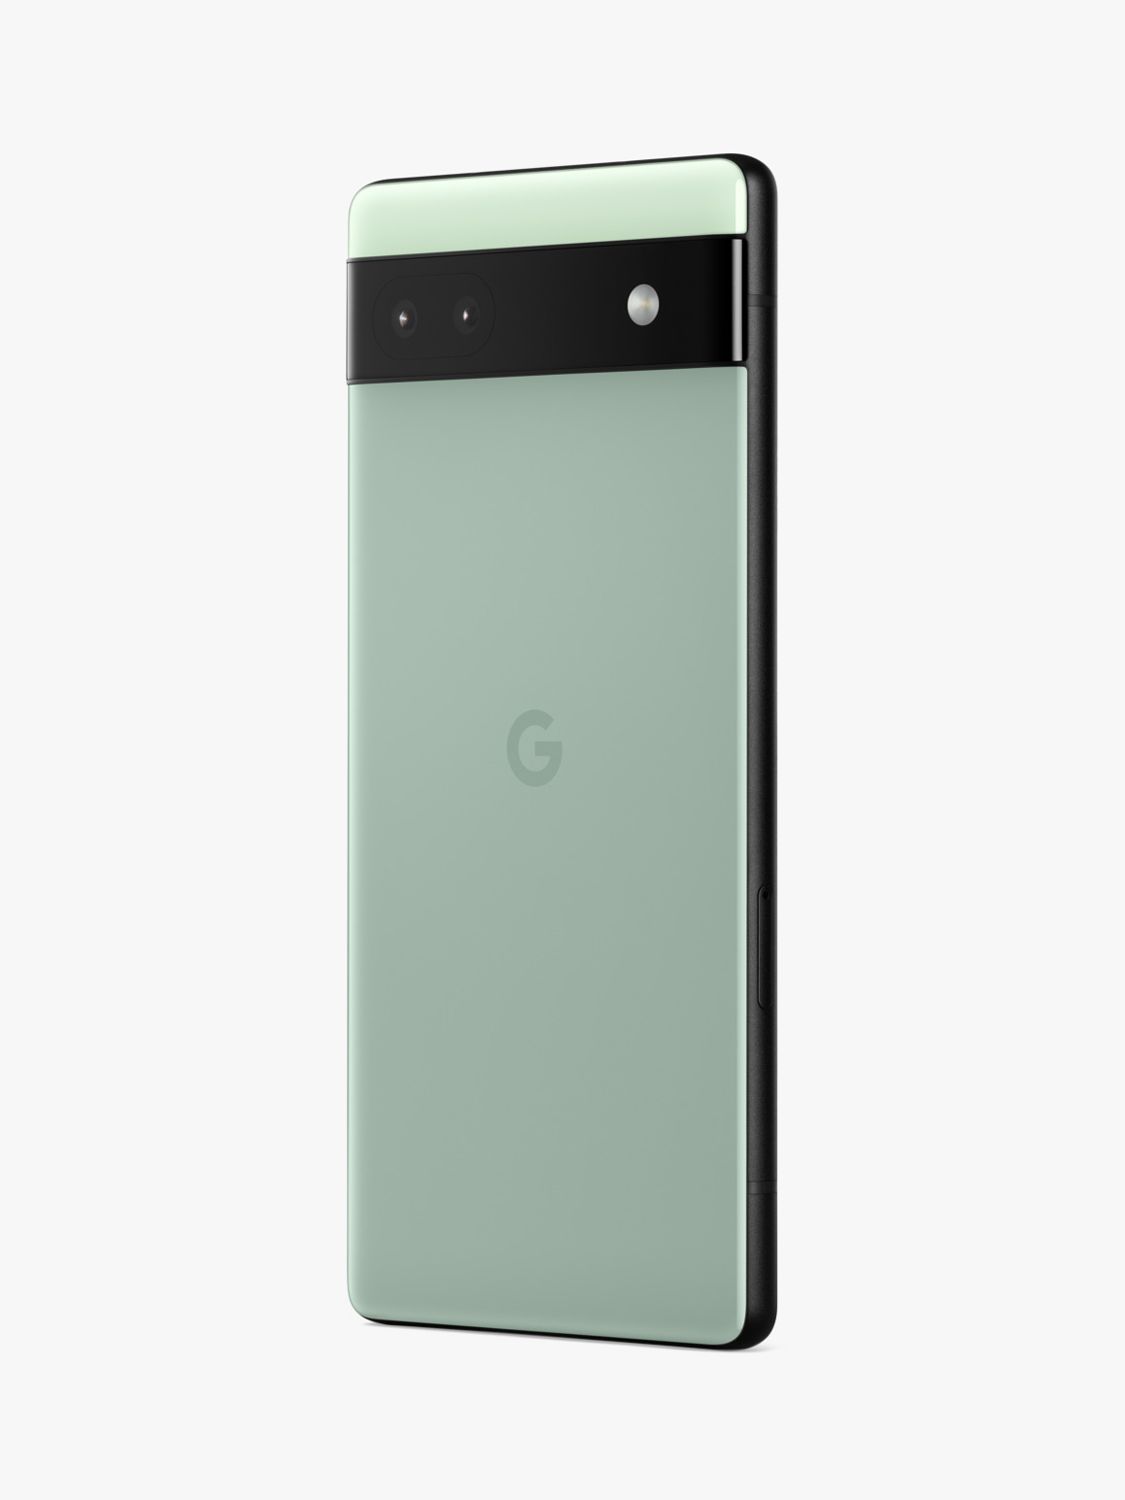 Google Pixel 6a Smartphone, Android, 6.1”, 5G, SIM Free, 128GB, Sage